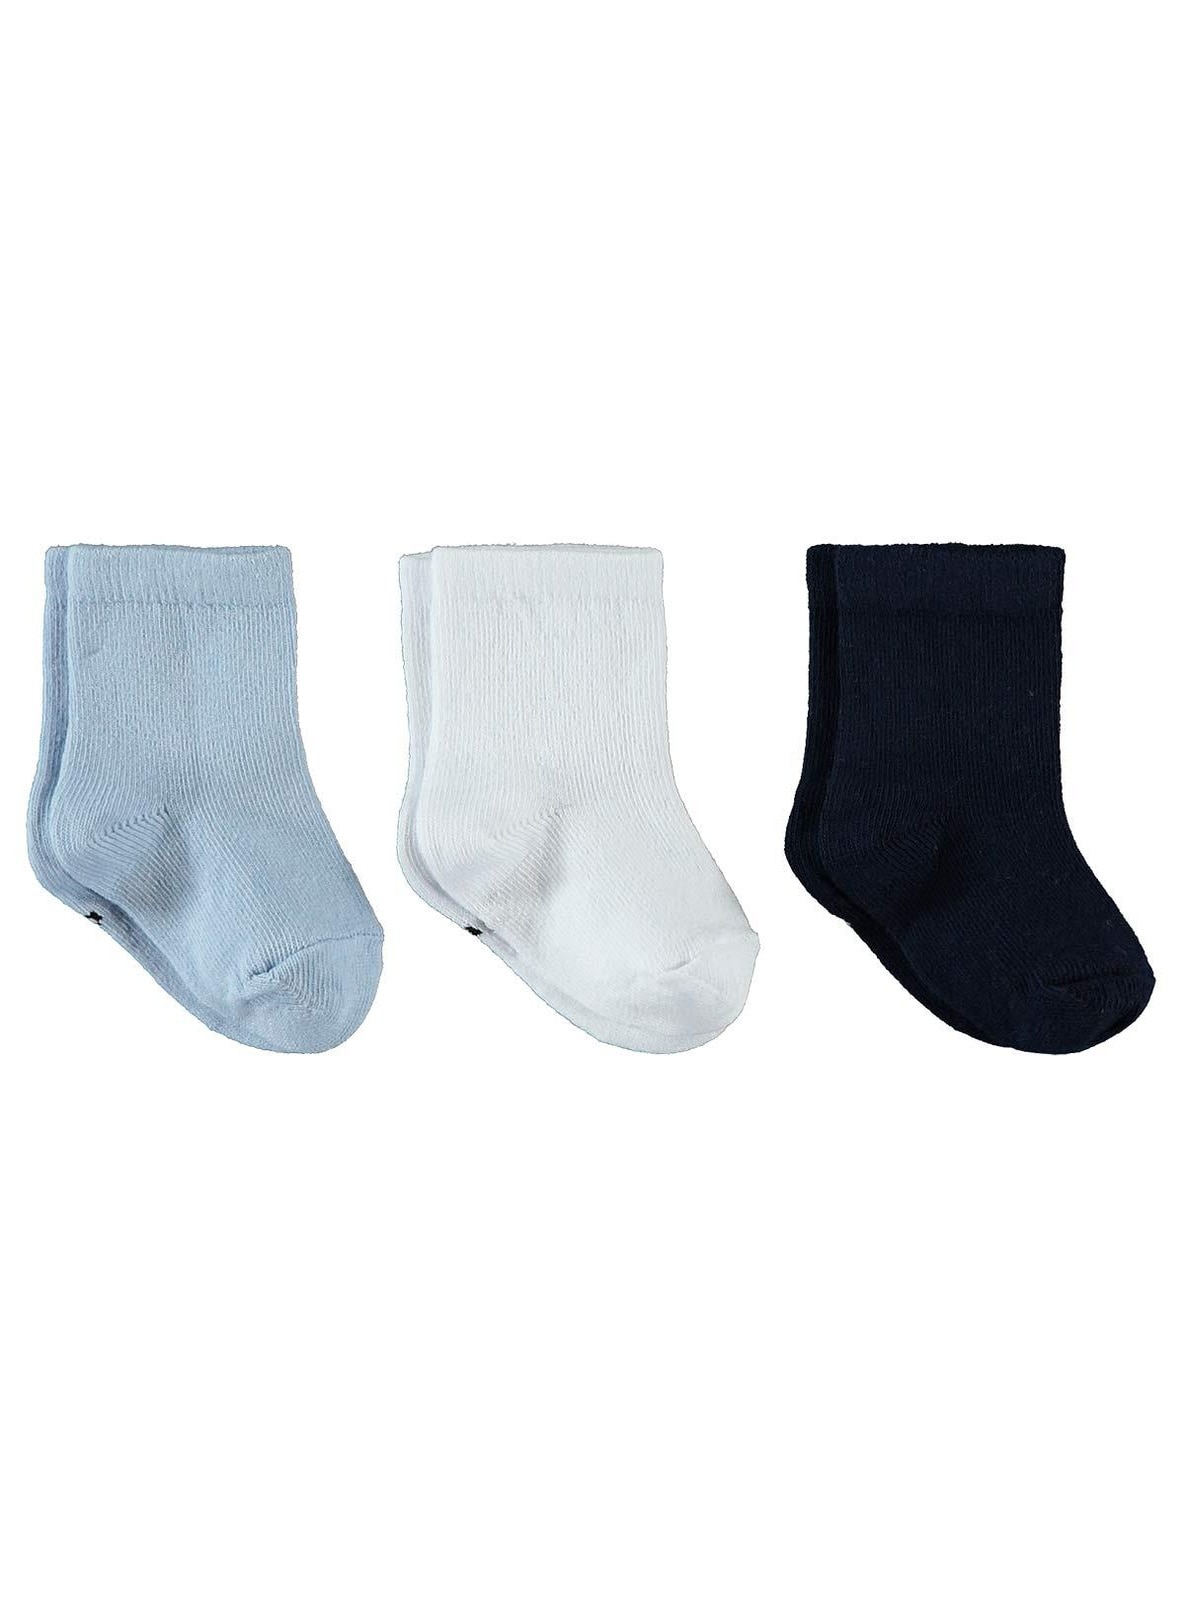 Blue - Baby Socks